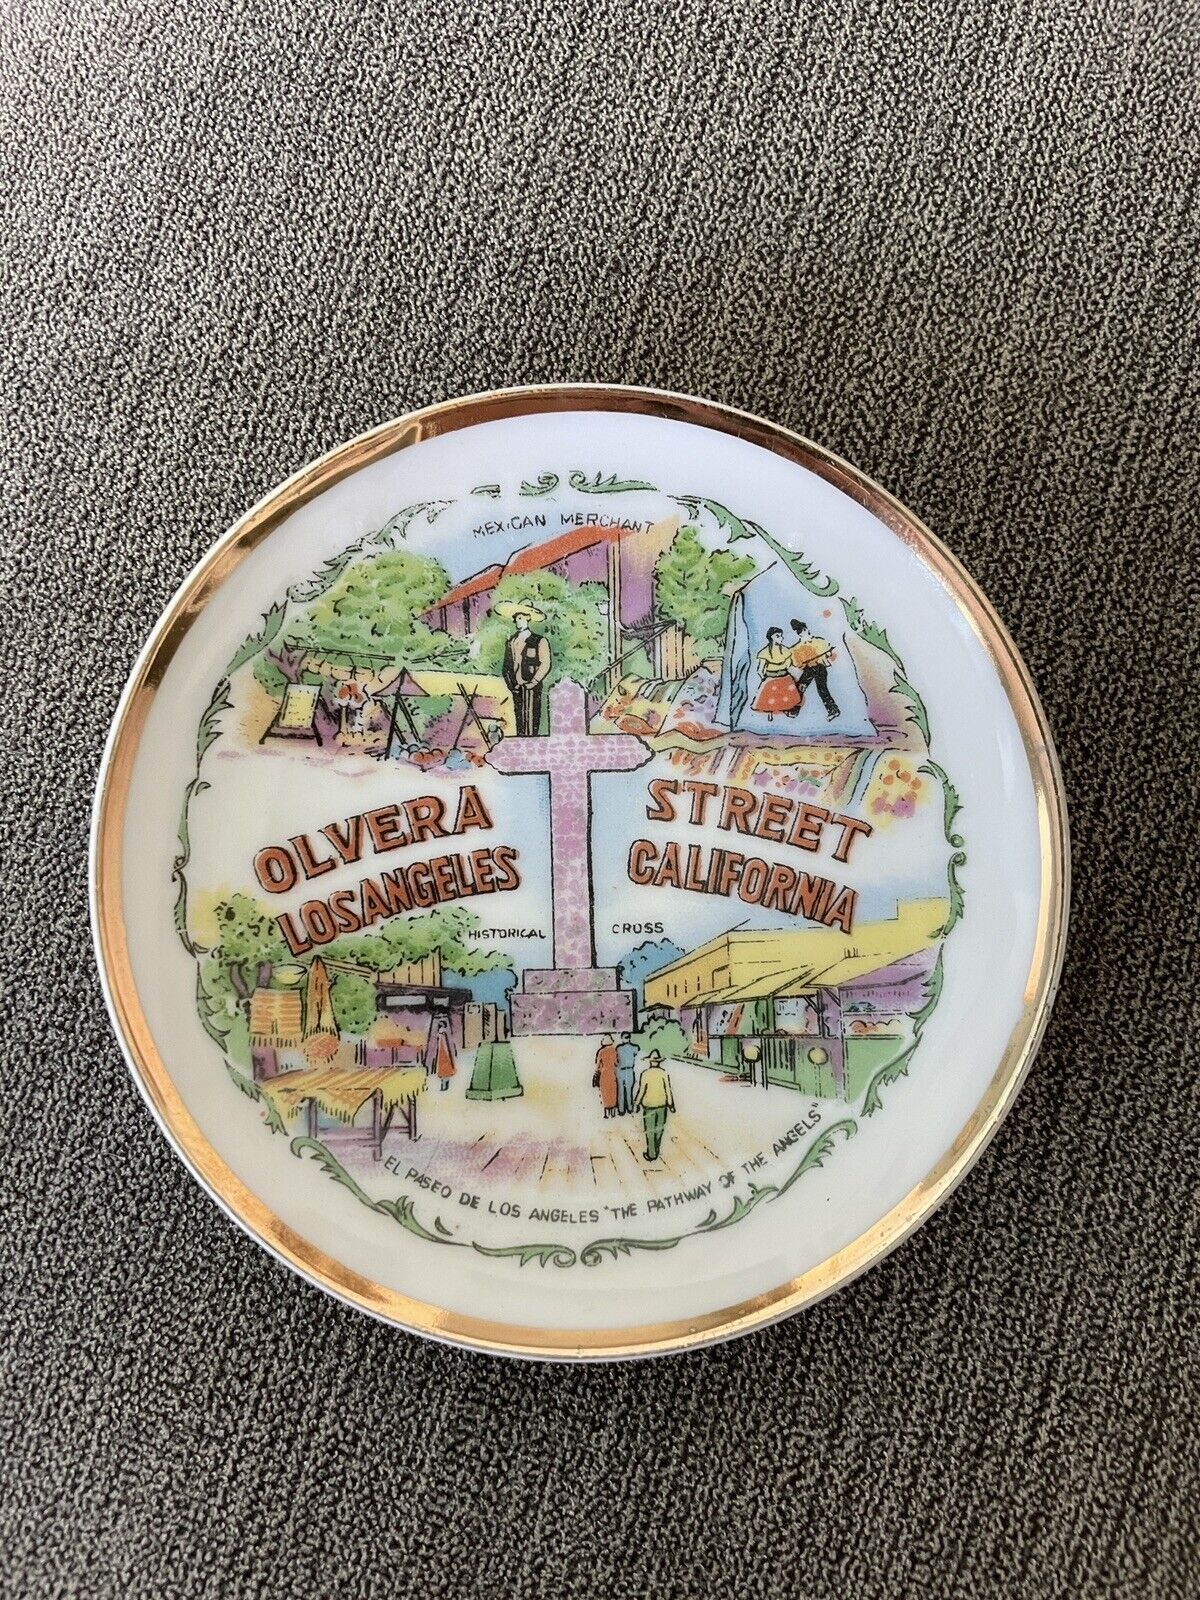 Olvera Street Los Angeles California Collector Plate Vintage Travel Souvenir 